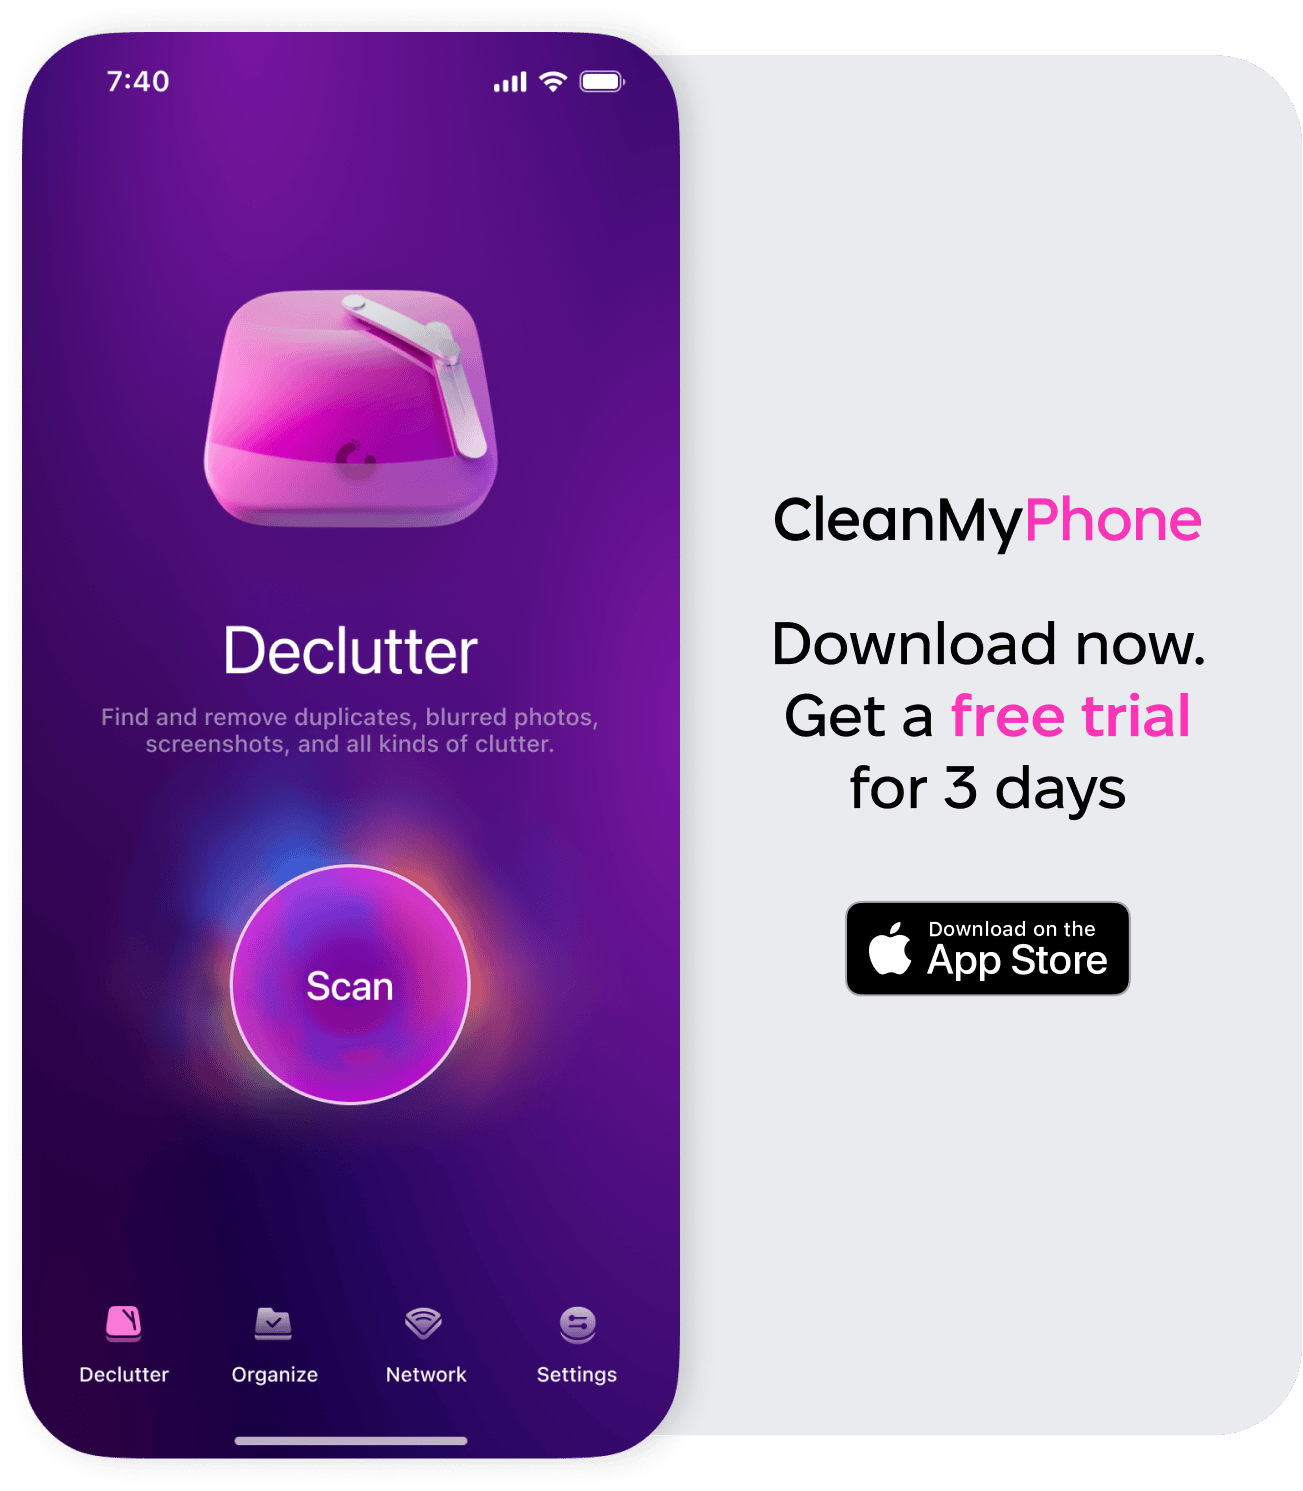 CleanMy®Phone app – Declutter module